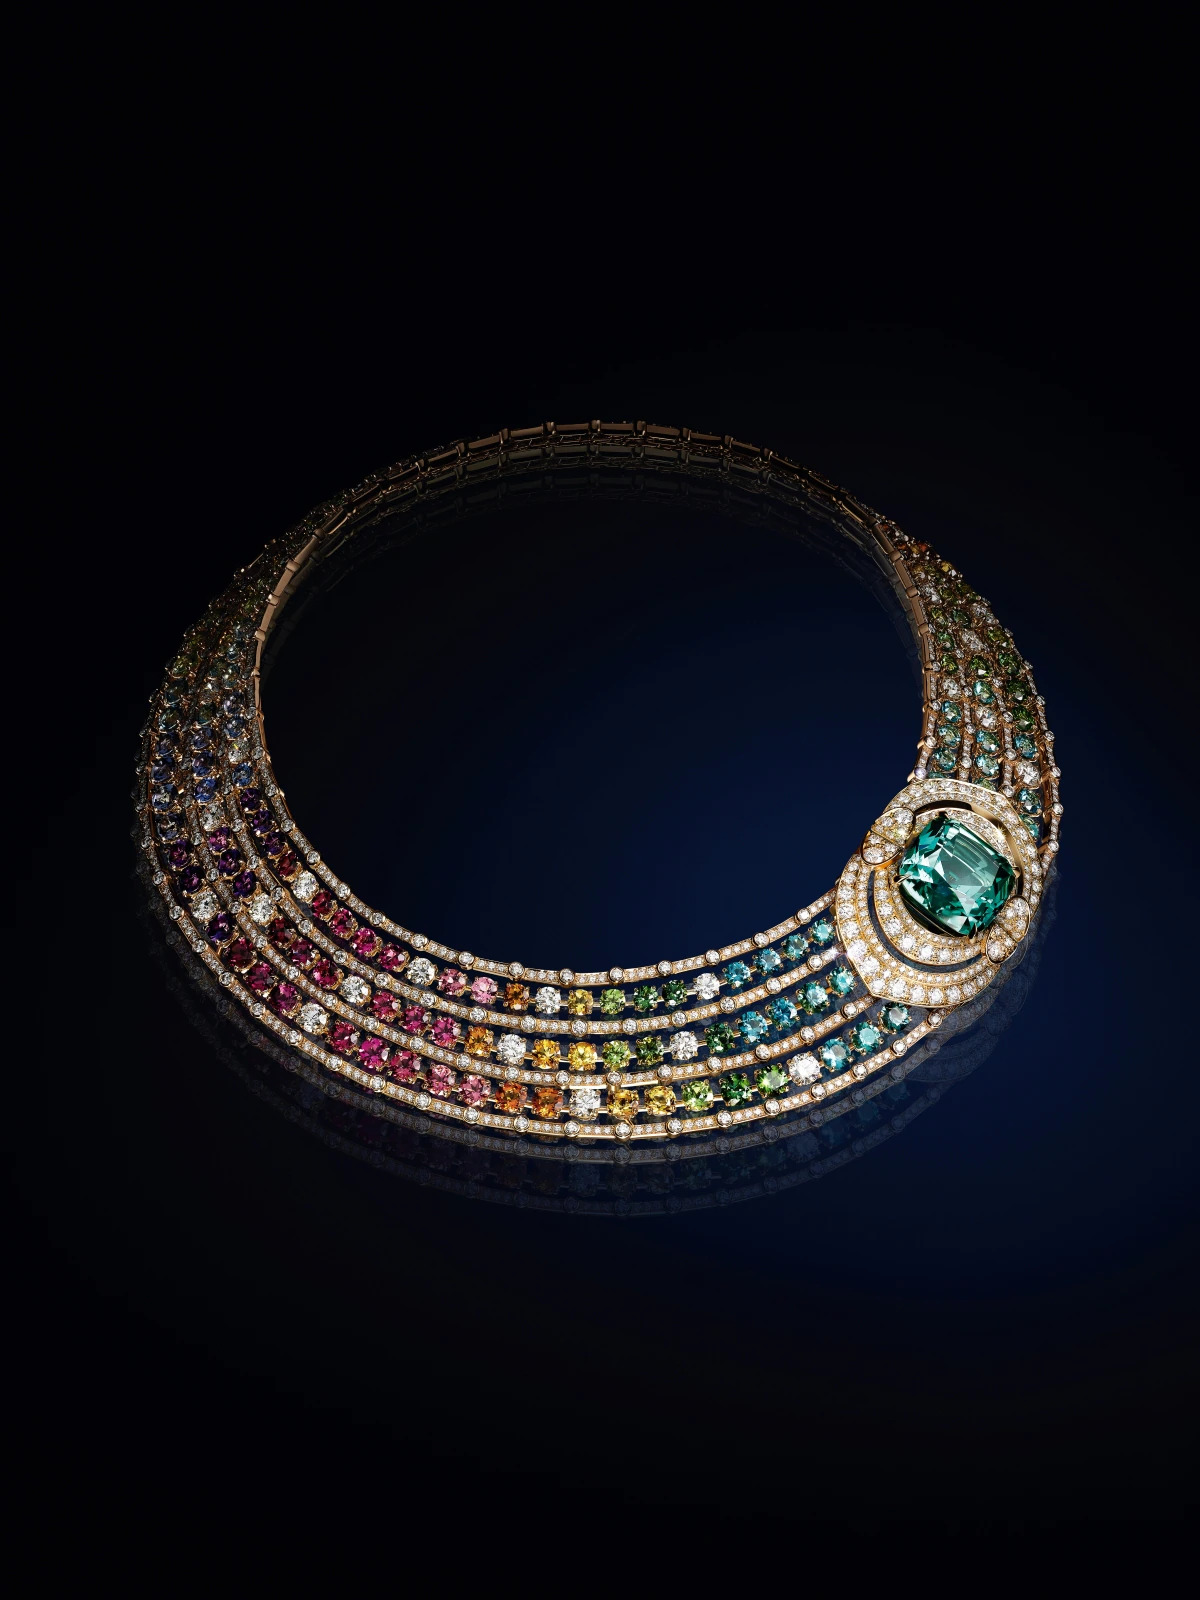 قلادة لو مالتيبين Le Multipin necklace من لوي فيتون Louis Vuitton